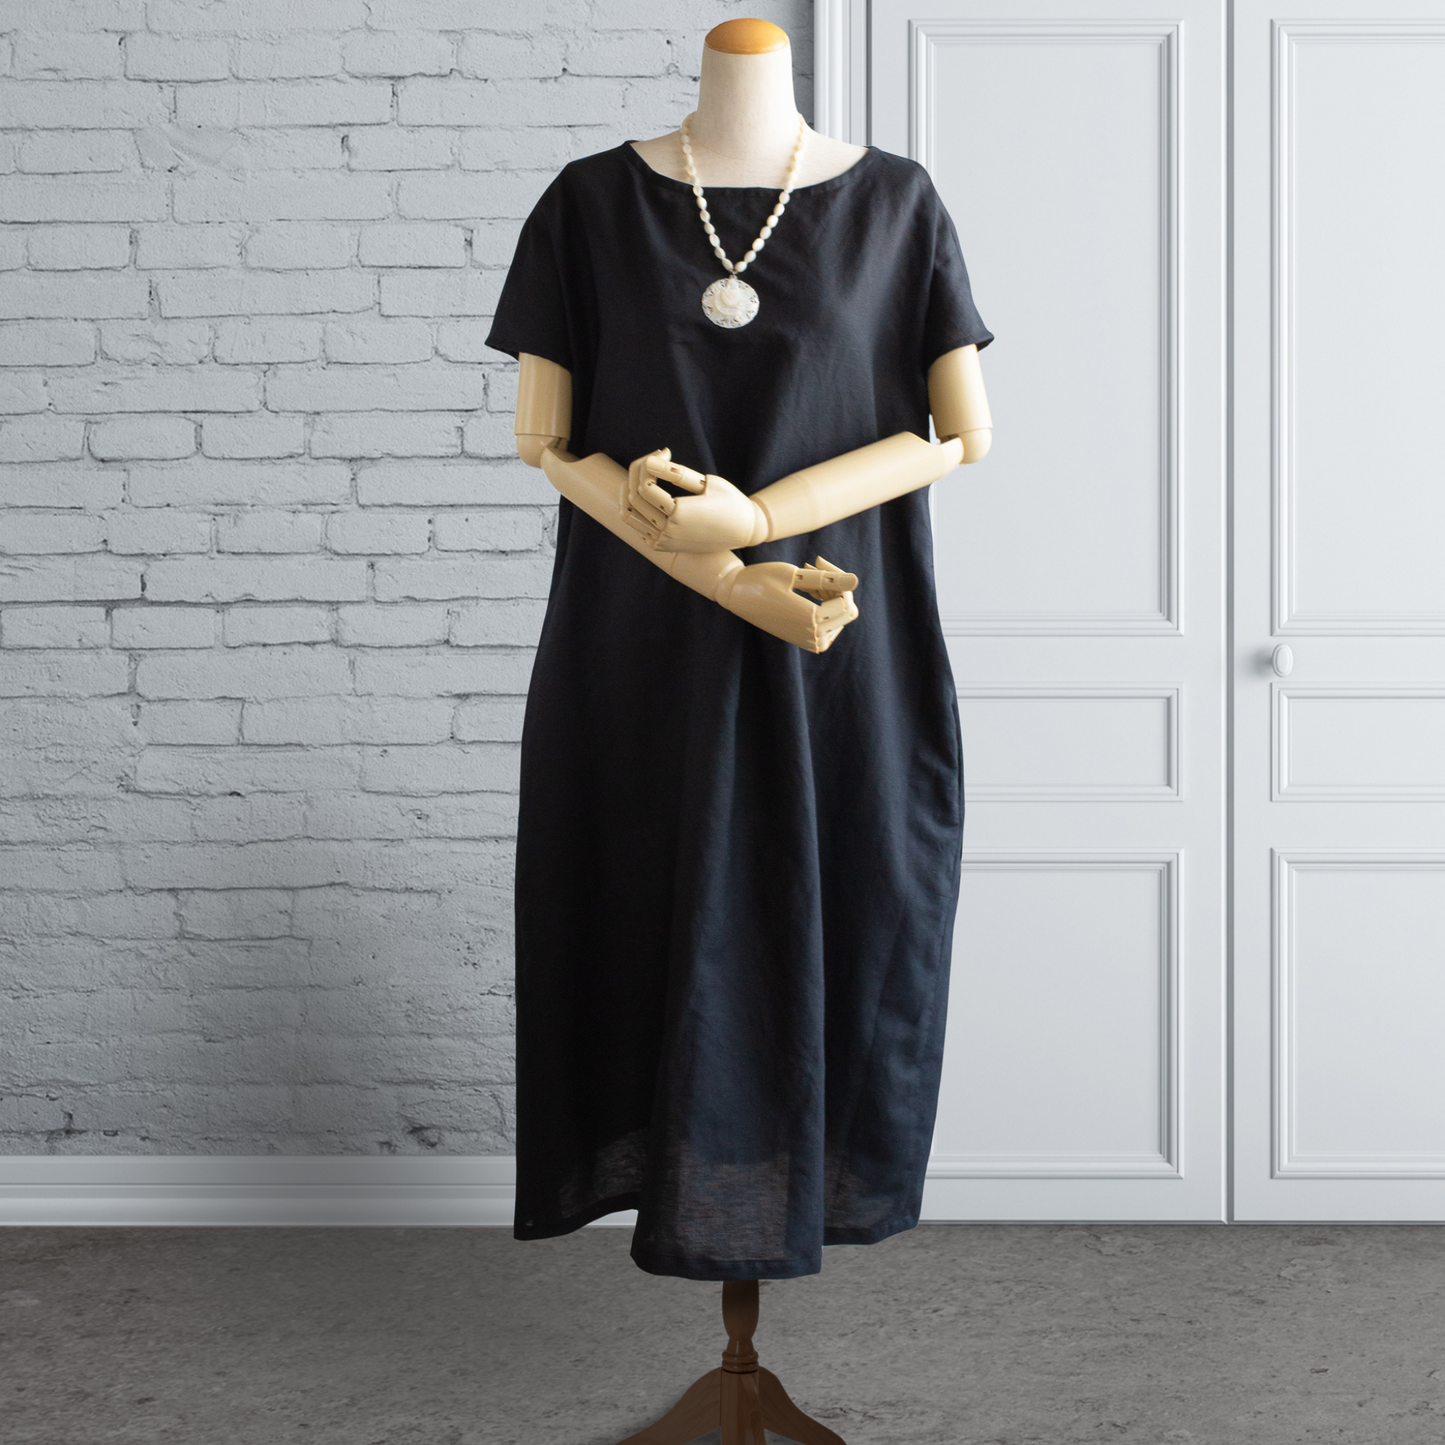 Hemp Linen Black Side Tuck Dress French Sleeve Maxi Length AP10 